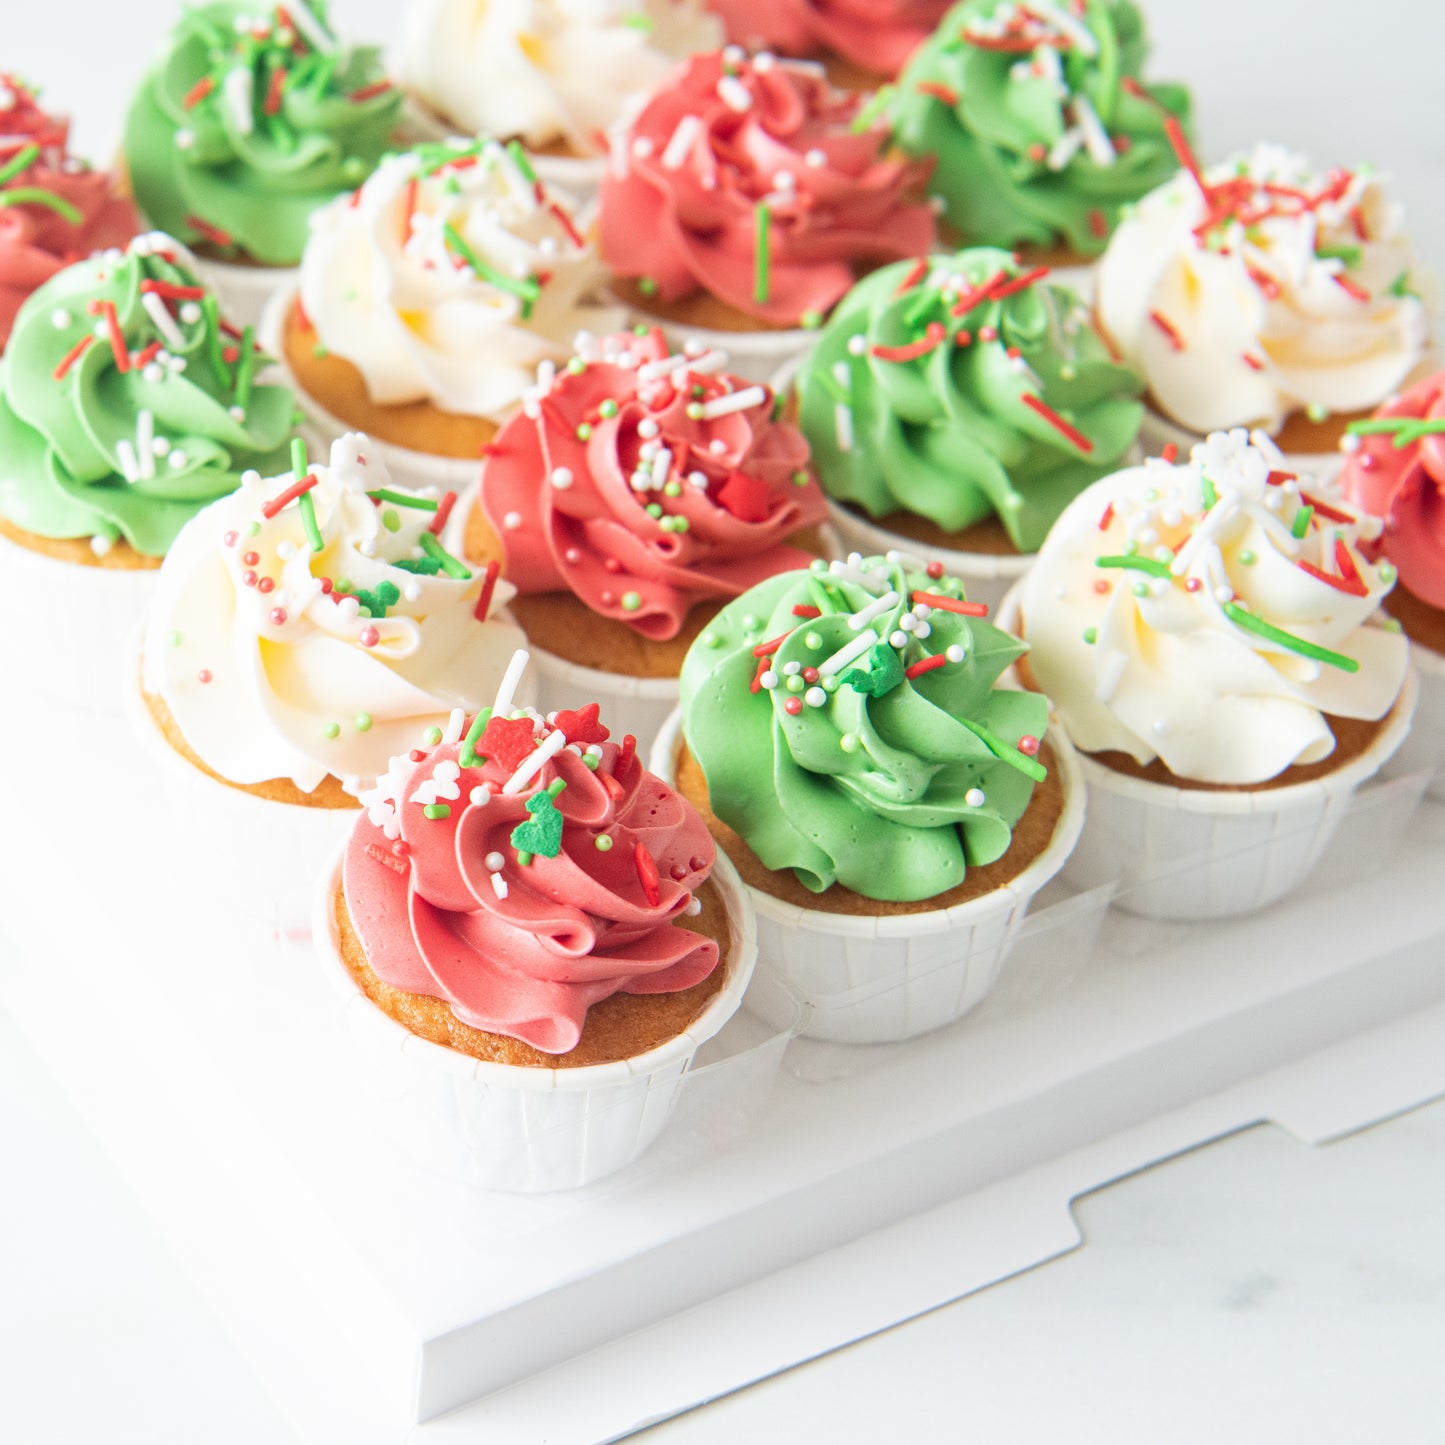 Ho ho ho! | Merry Christmas | 16pcs Merry Cupcakes in gift box| $48.80